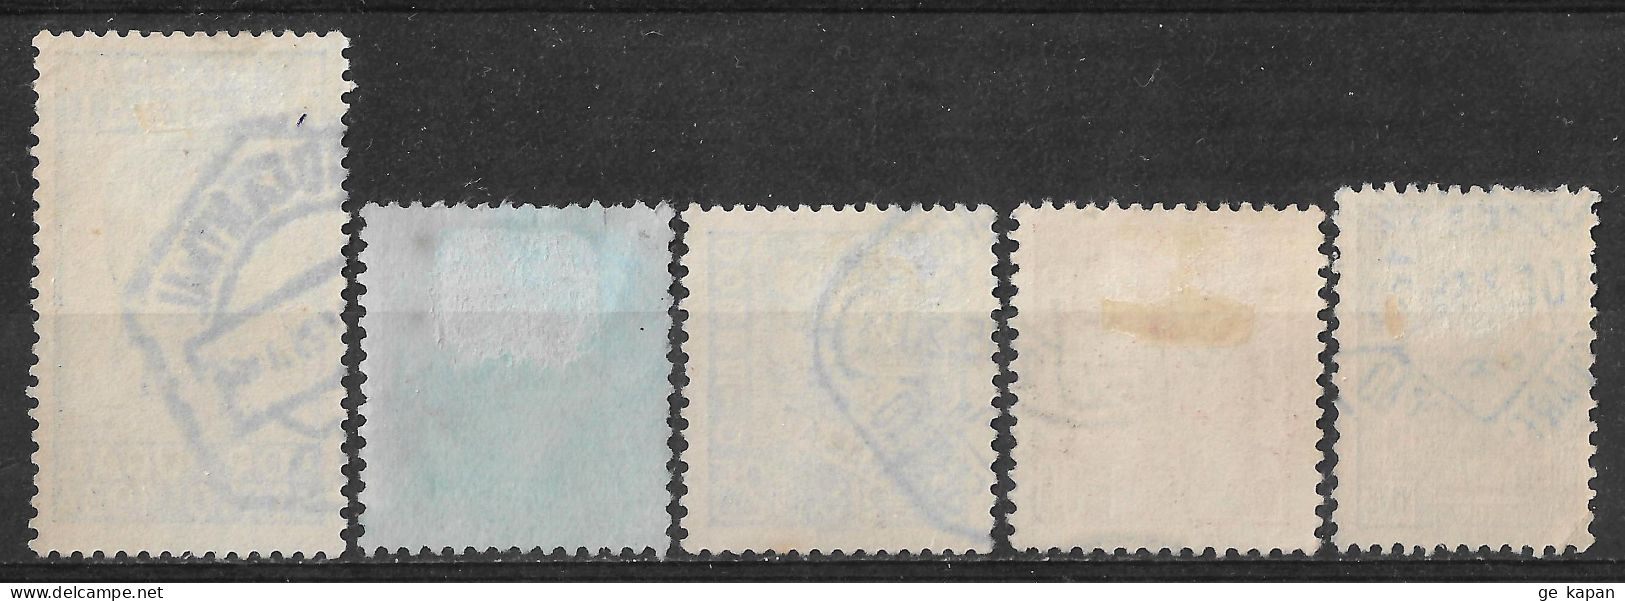 1934-1935 PORTUGAL SET OF 5 USED STAMPS (Michel # 580,585x,586,588,589) CV €22.30 - Oblitérés